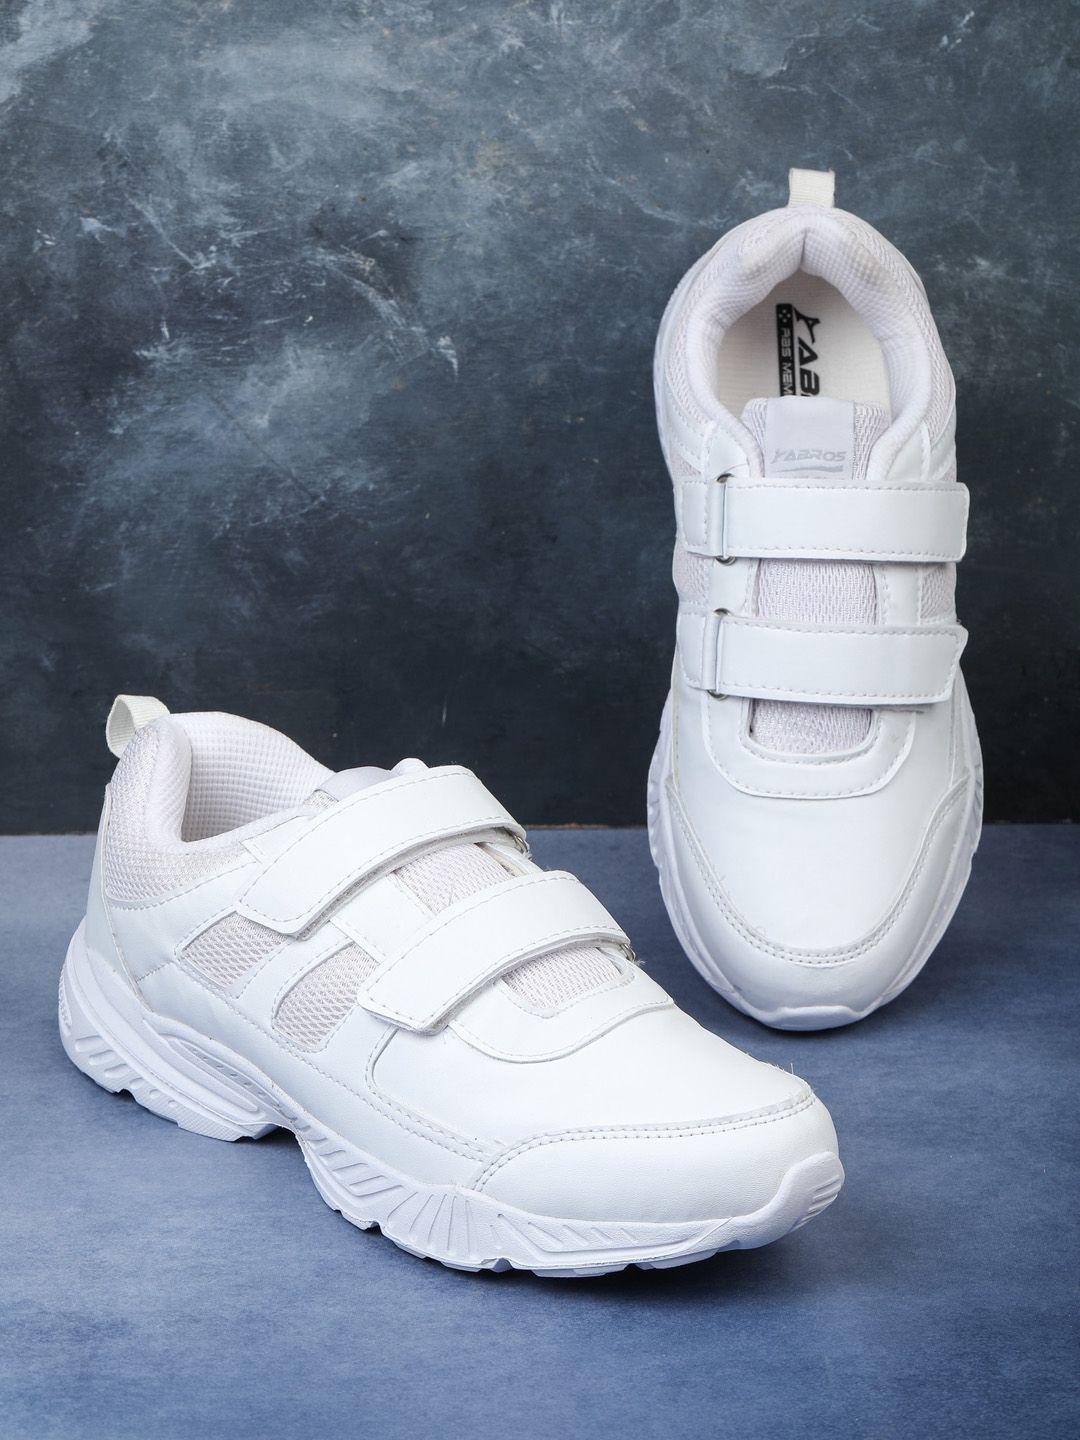 abros unisex kids white lace-ups school shoes